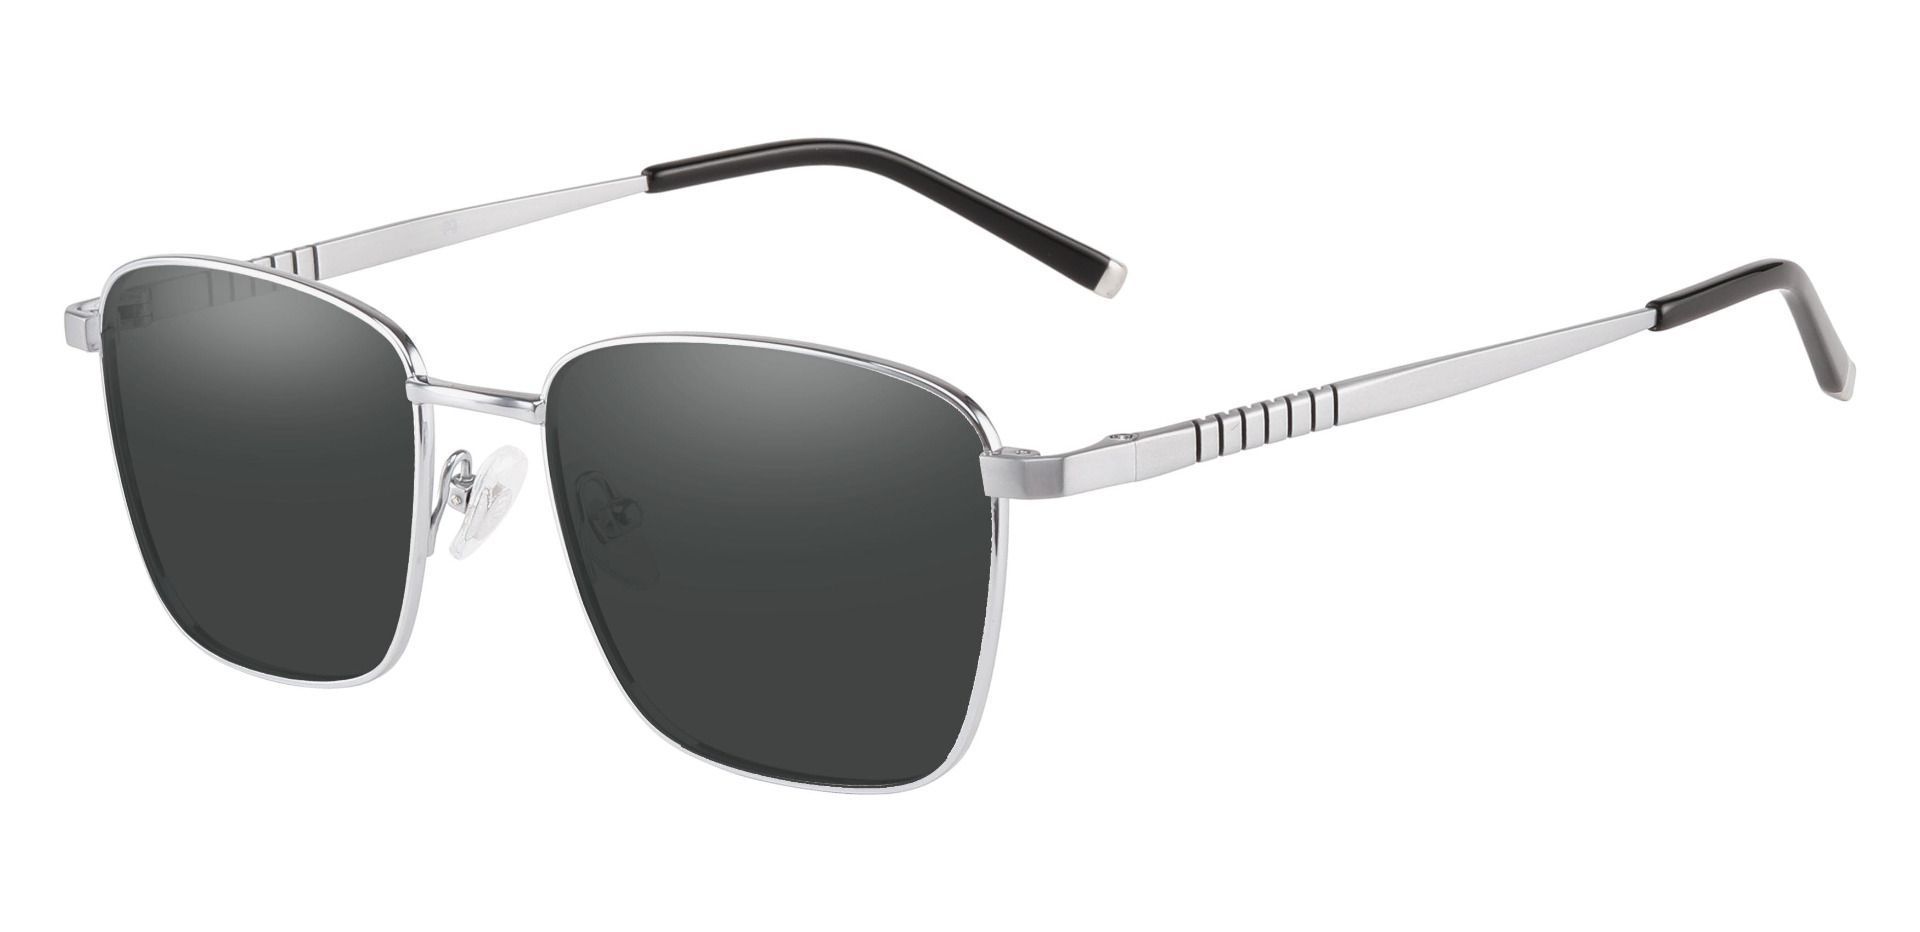 May Square Progressive Sunglasses - Silver Frame With Gray Lenses